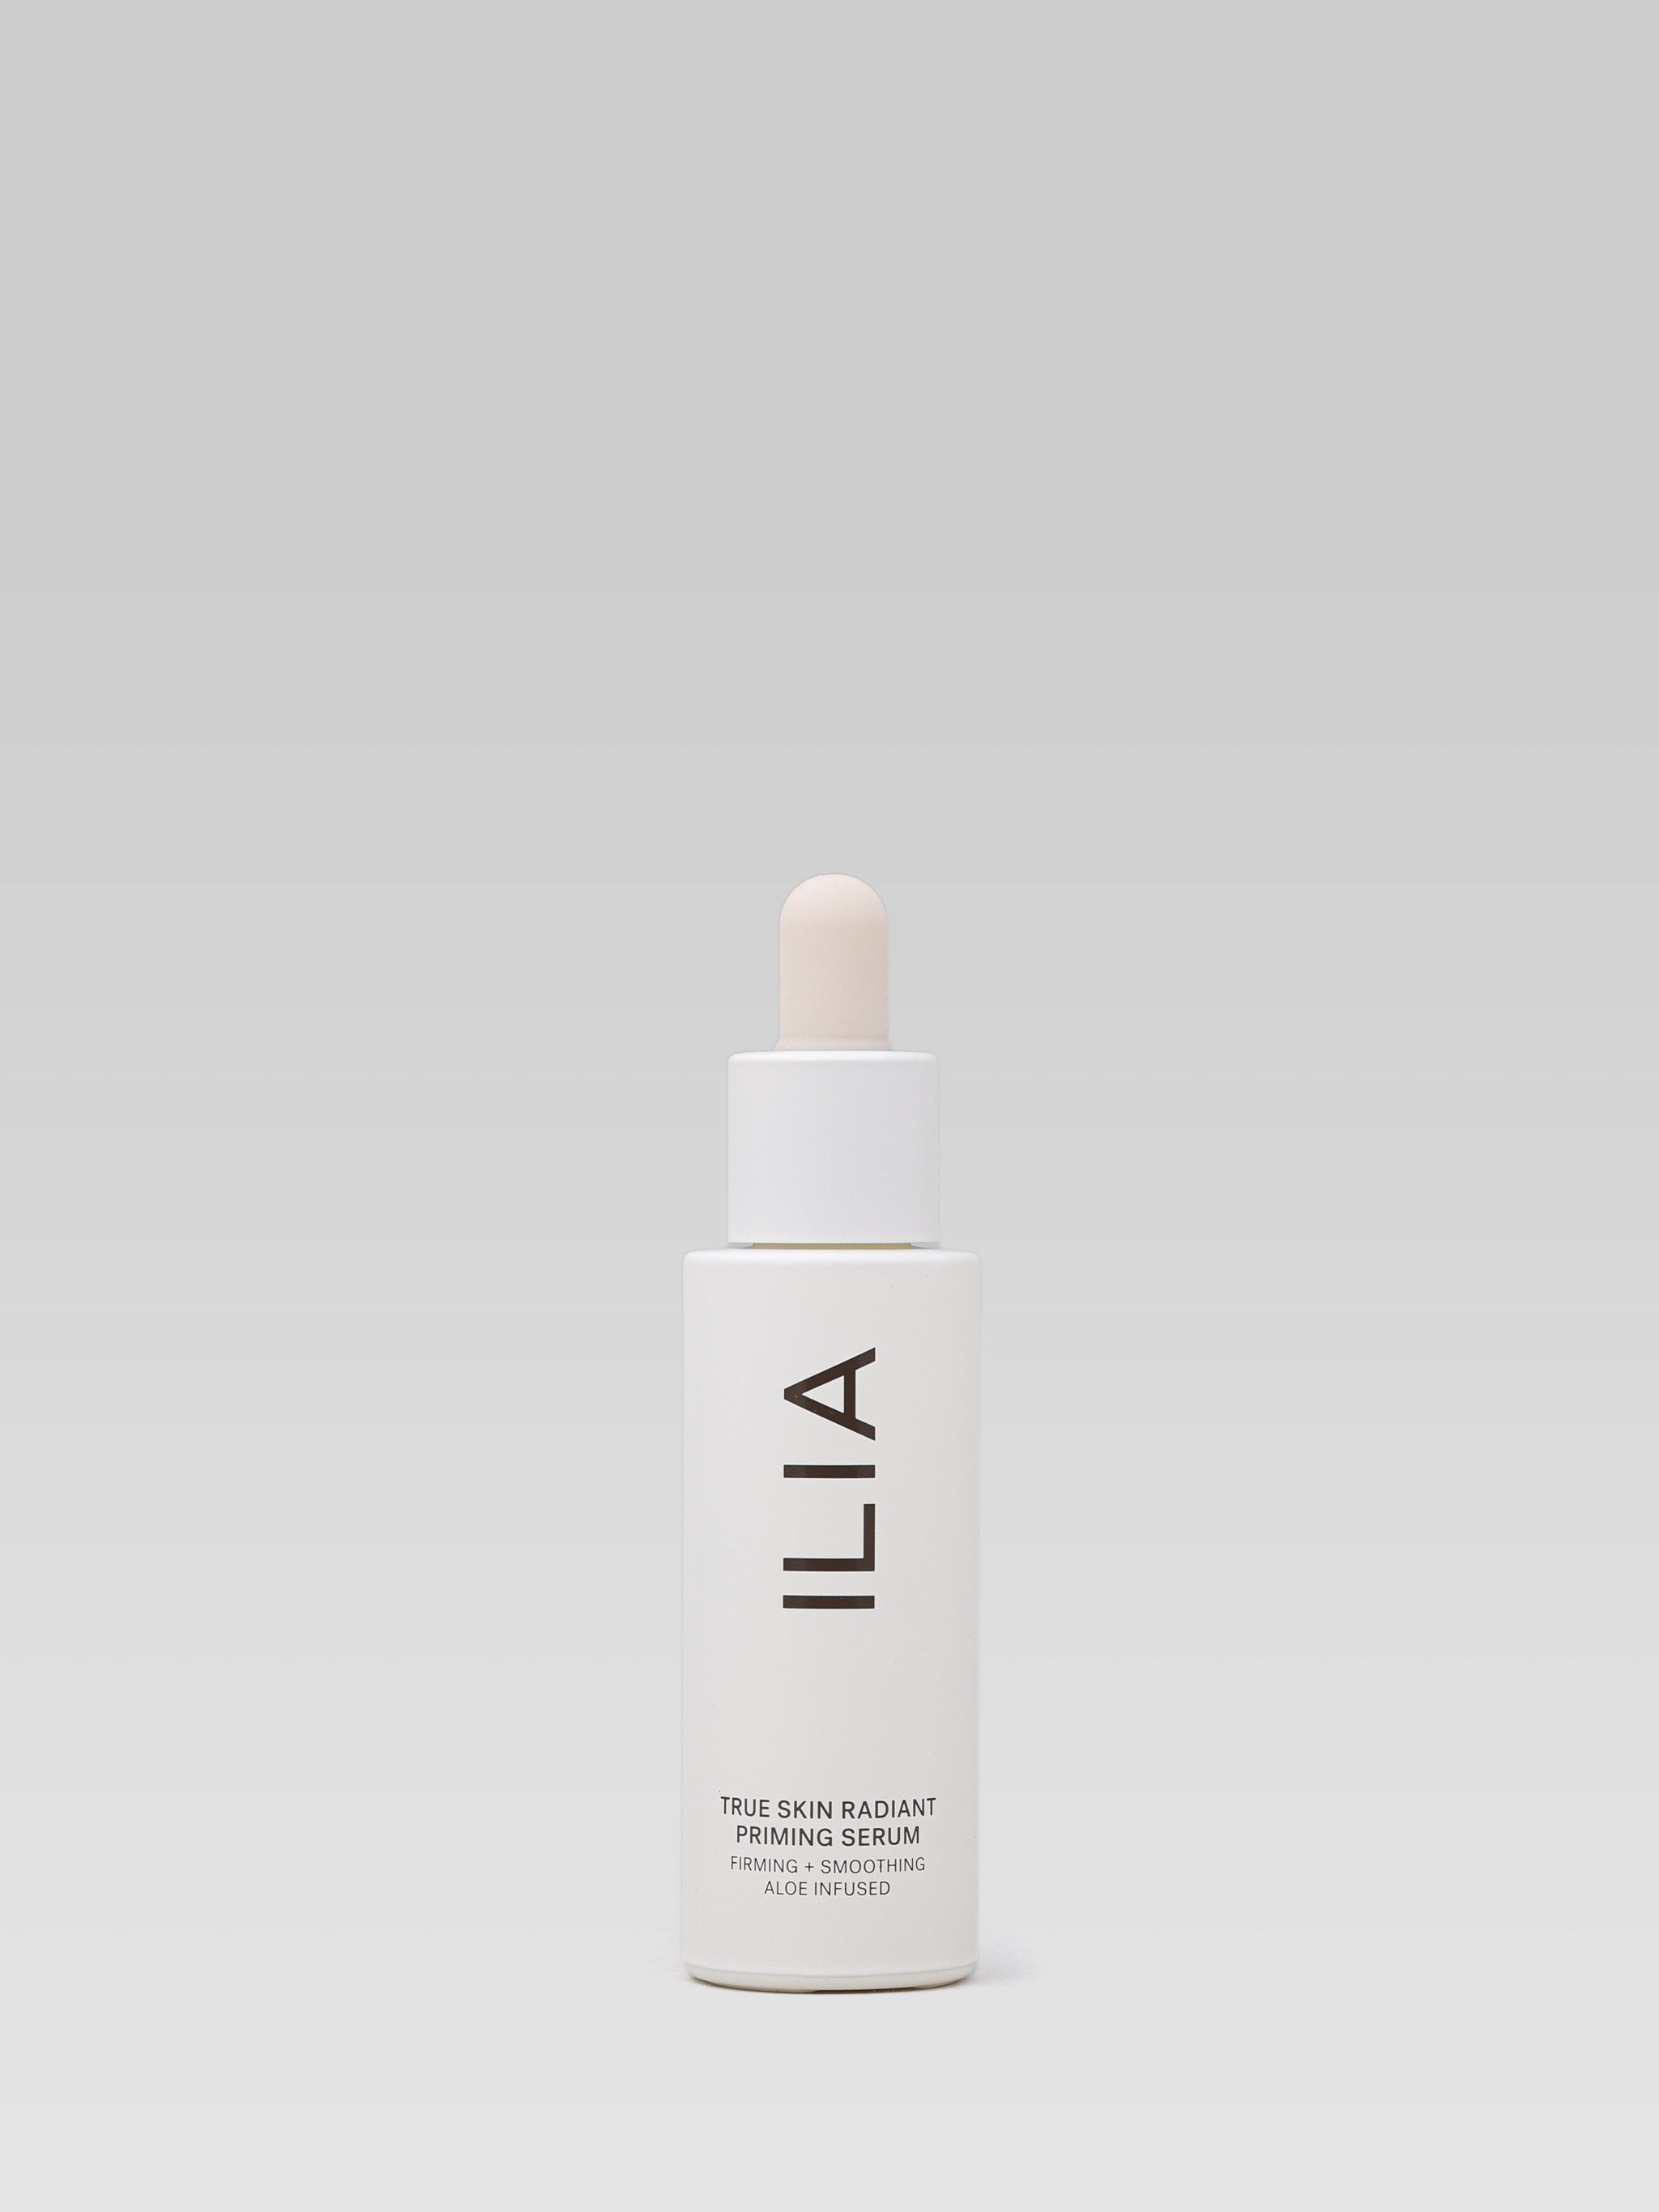 Ilia Beauty True Skin Radiant Priming Serum Light It Up product shot 